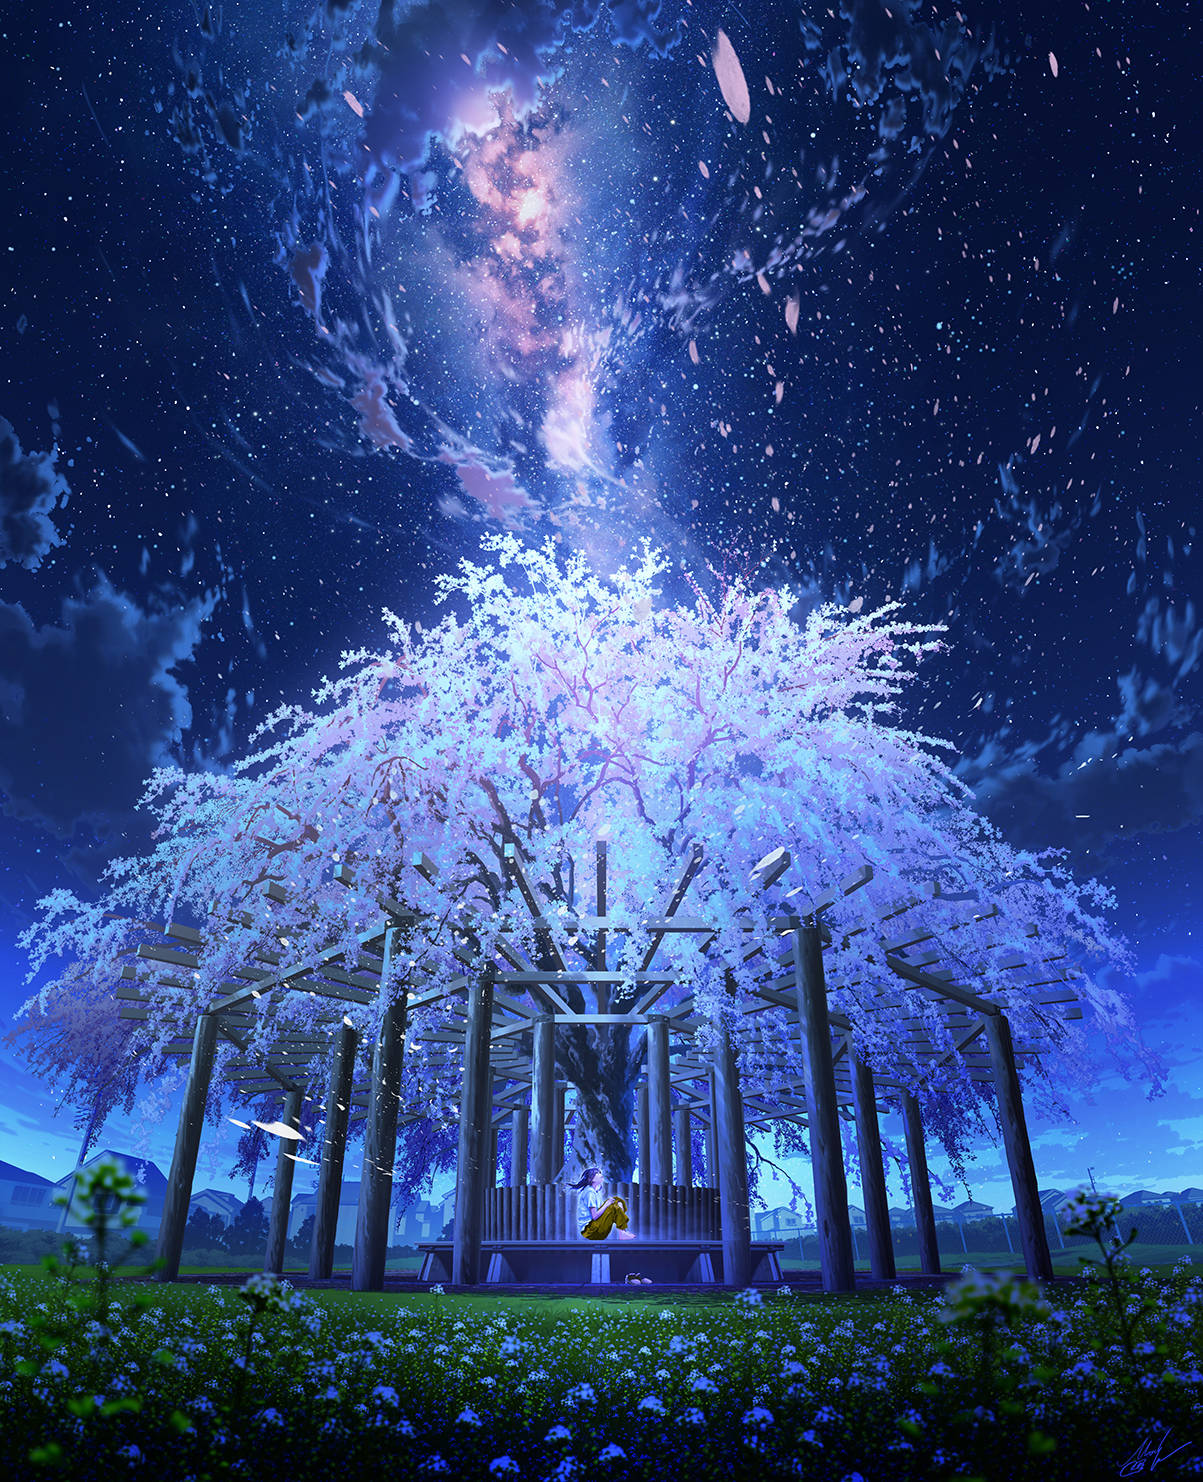 Anime 1203x1482 Mocha cherry blossom anime girls sky flowers starry night trees stars petals galaxy nebula night women outdoors Milky Way looking up portrait display field sitting